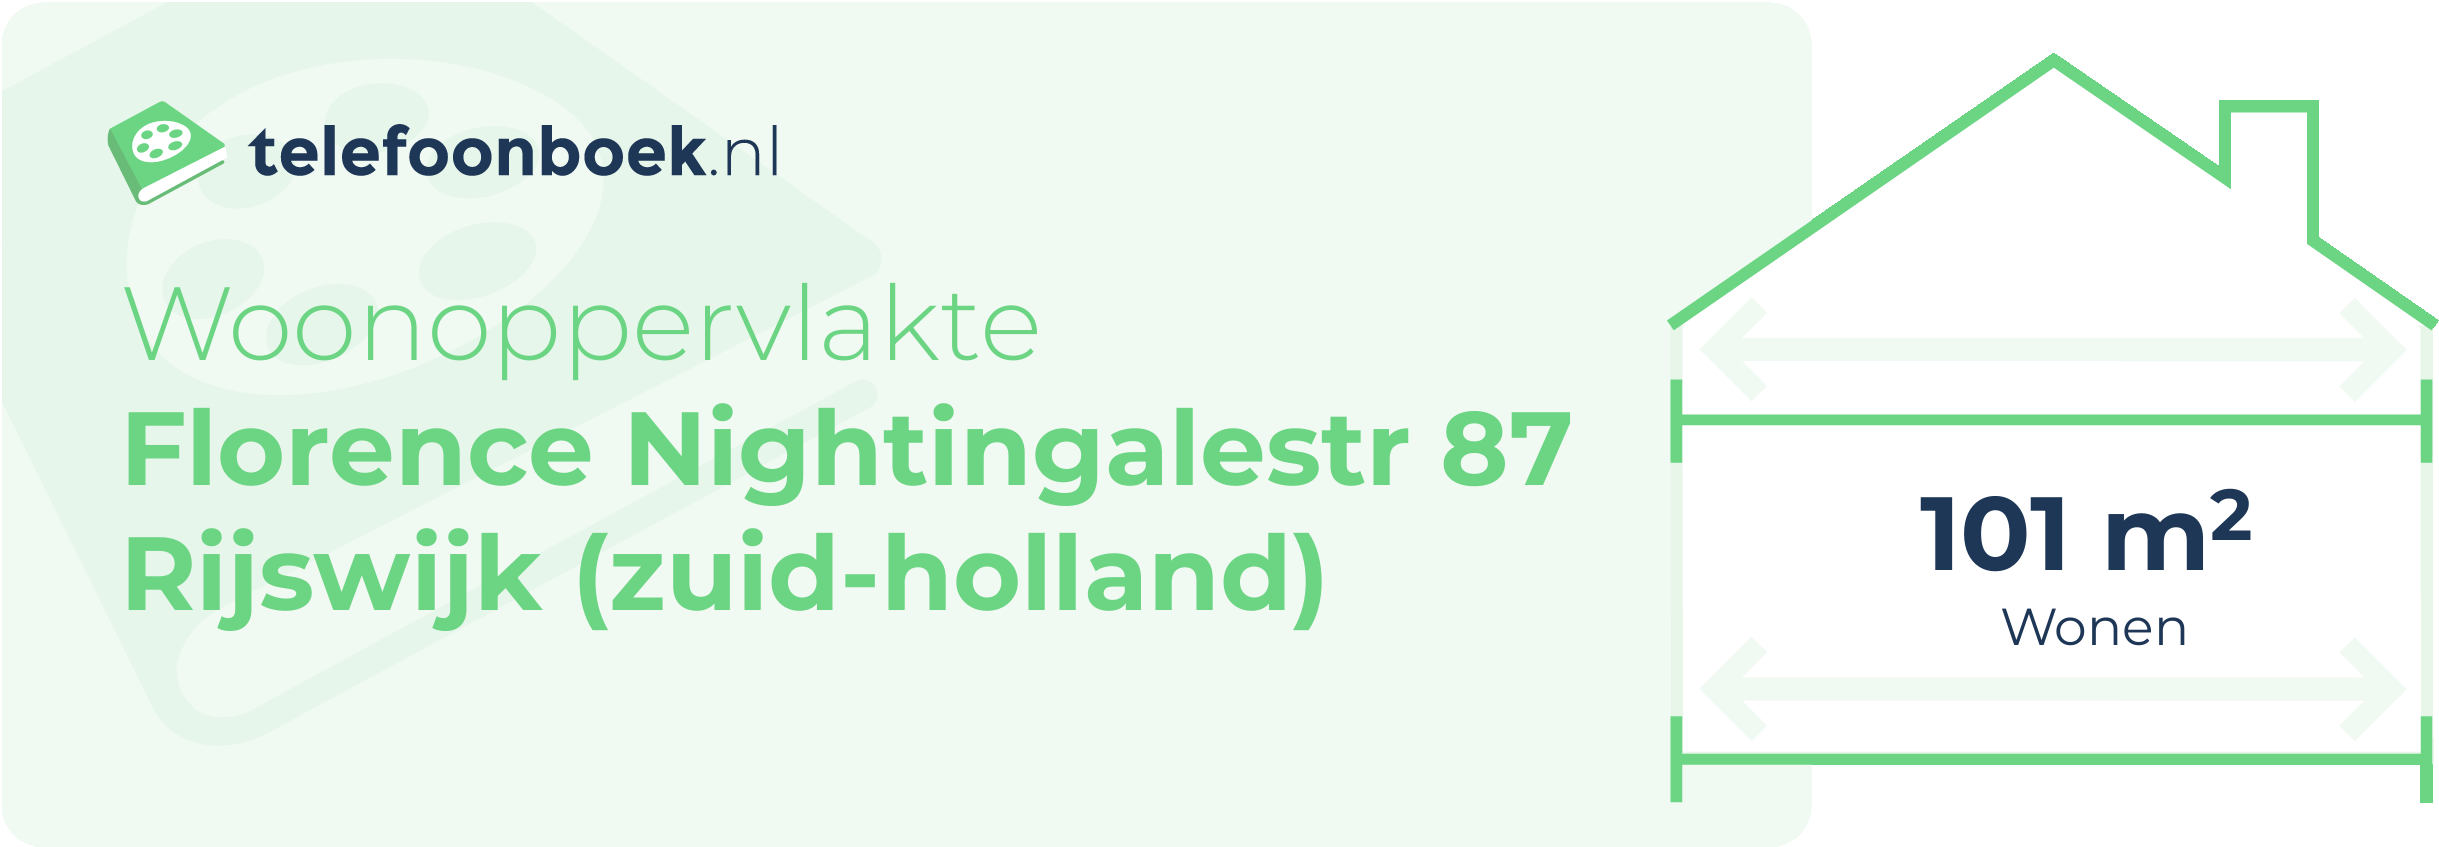 Woonoppervlakte Florence Nightingalestr 87 Rijswijk (Zuid-Holland)